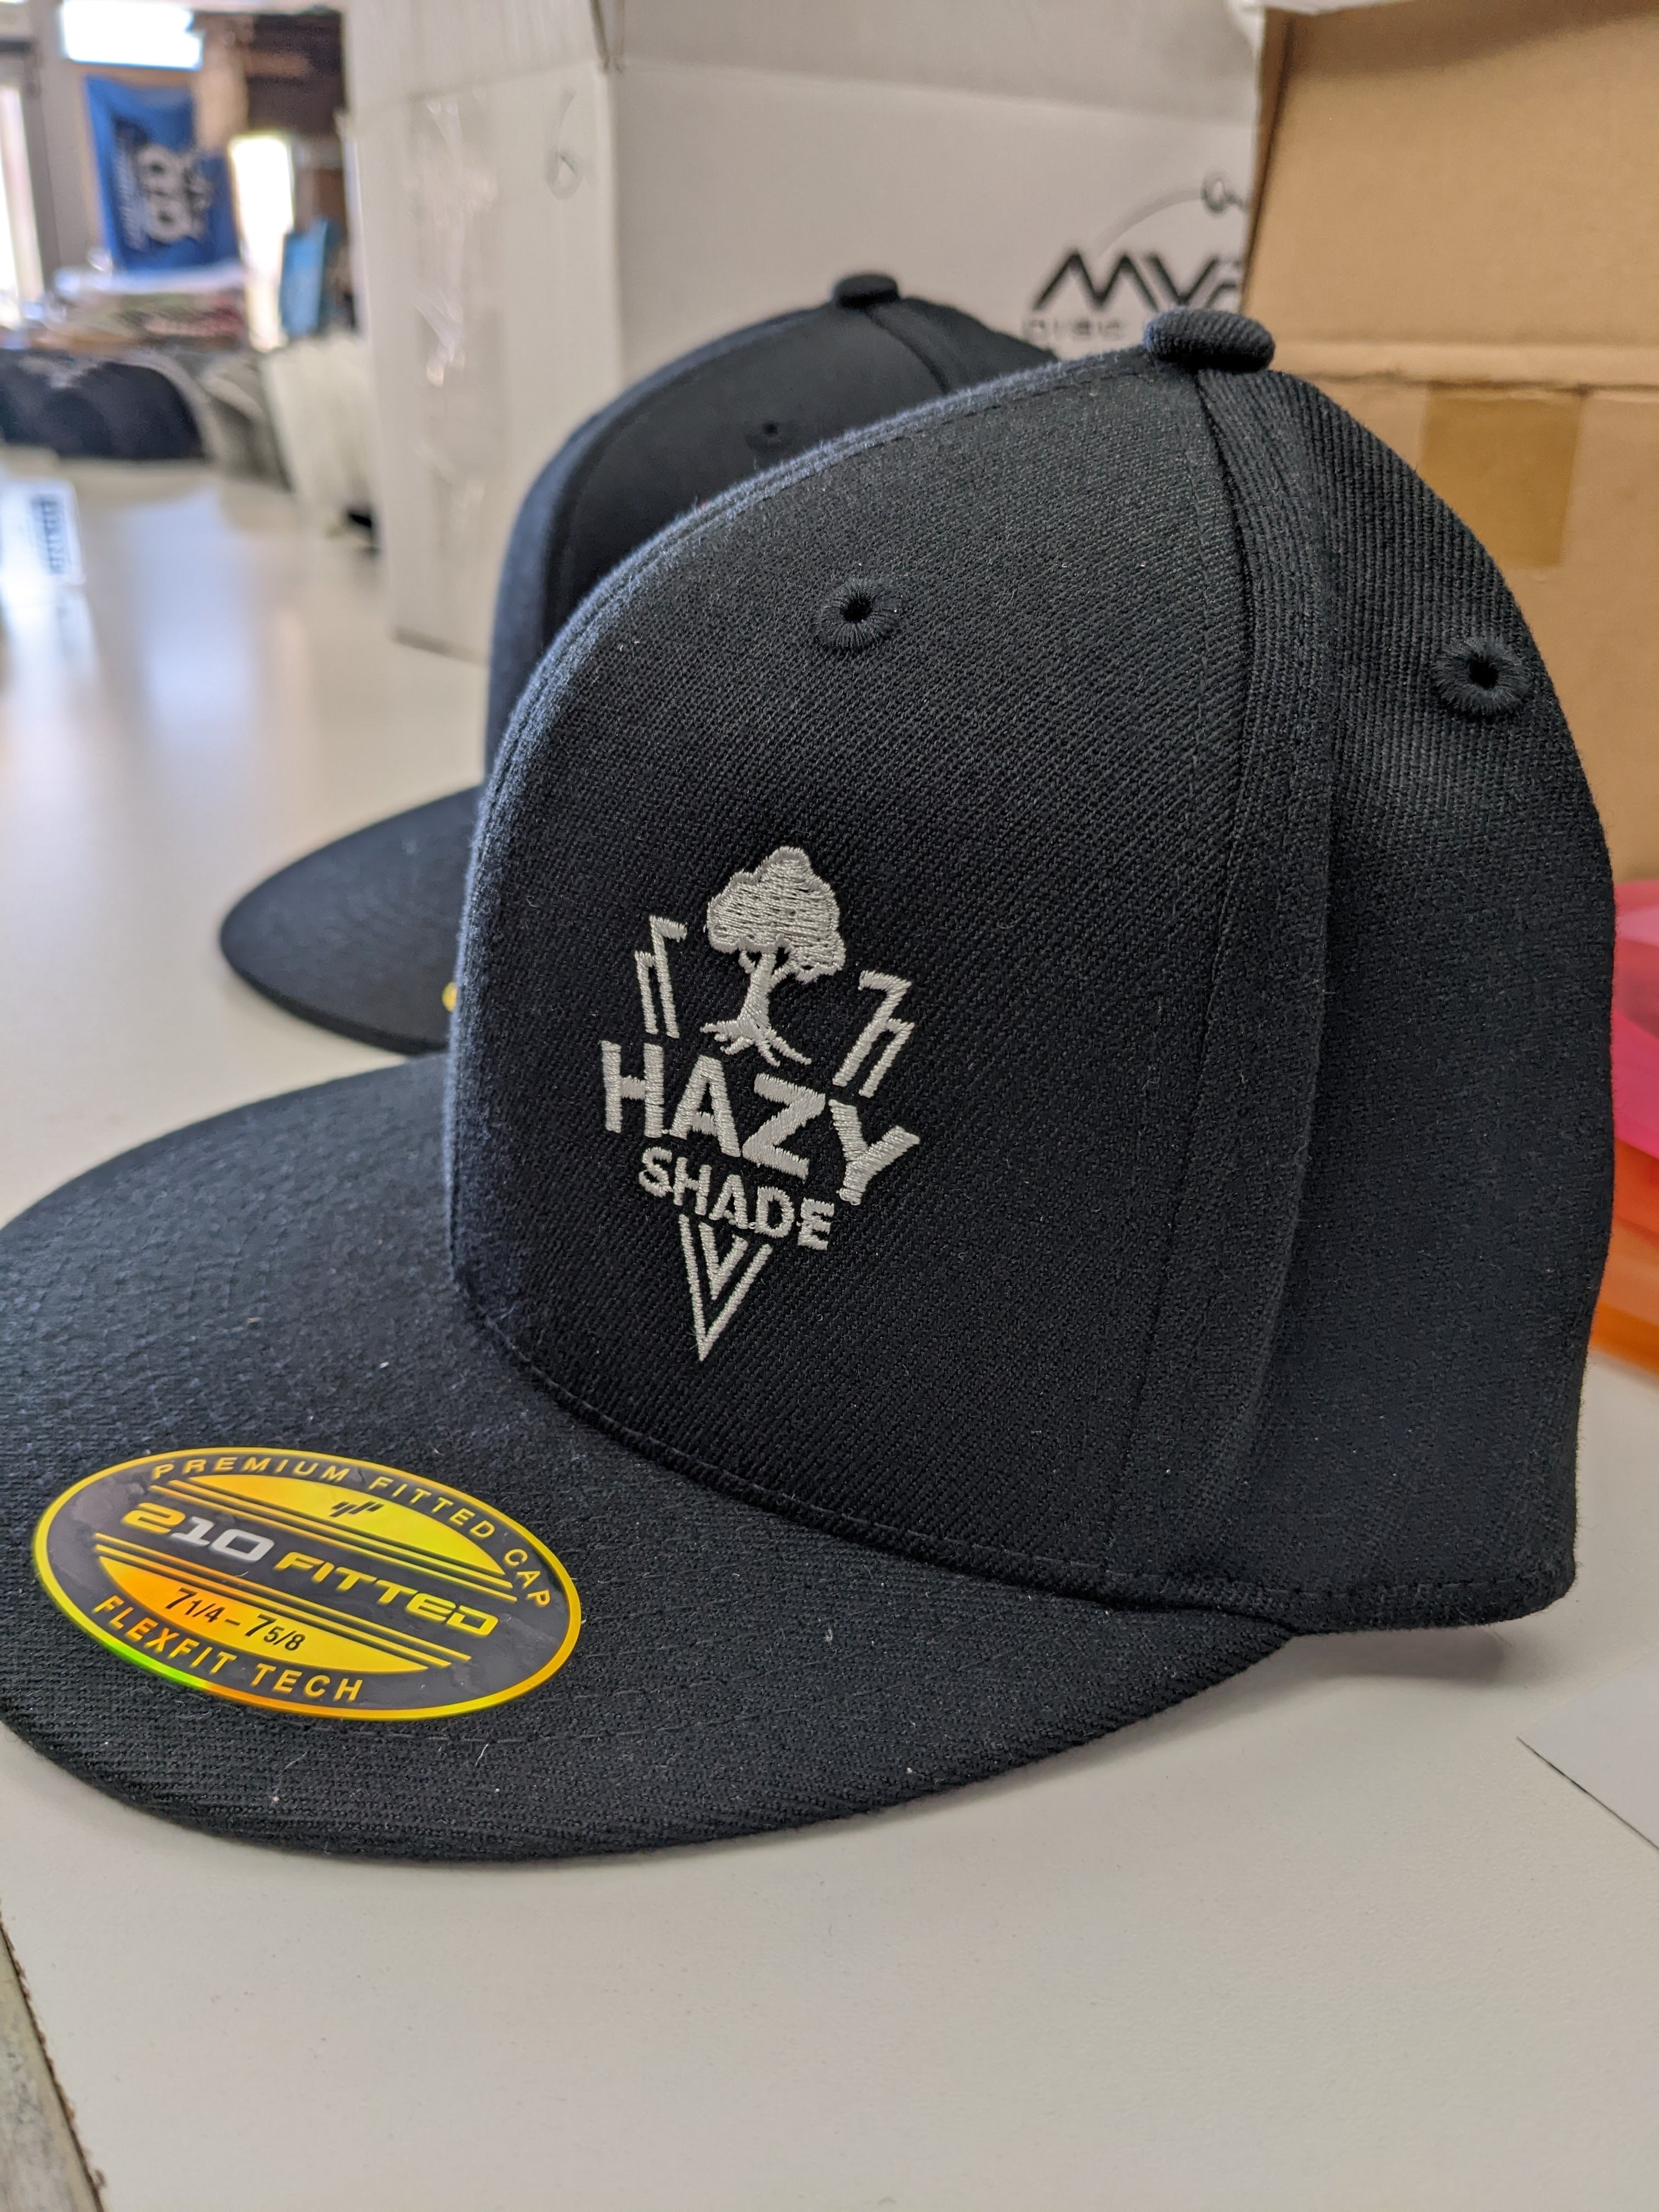 Hazy Shade 210 Fitted Flat Bill Hat Black w/ Triangle Logo